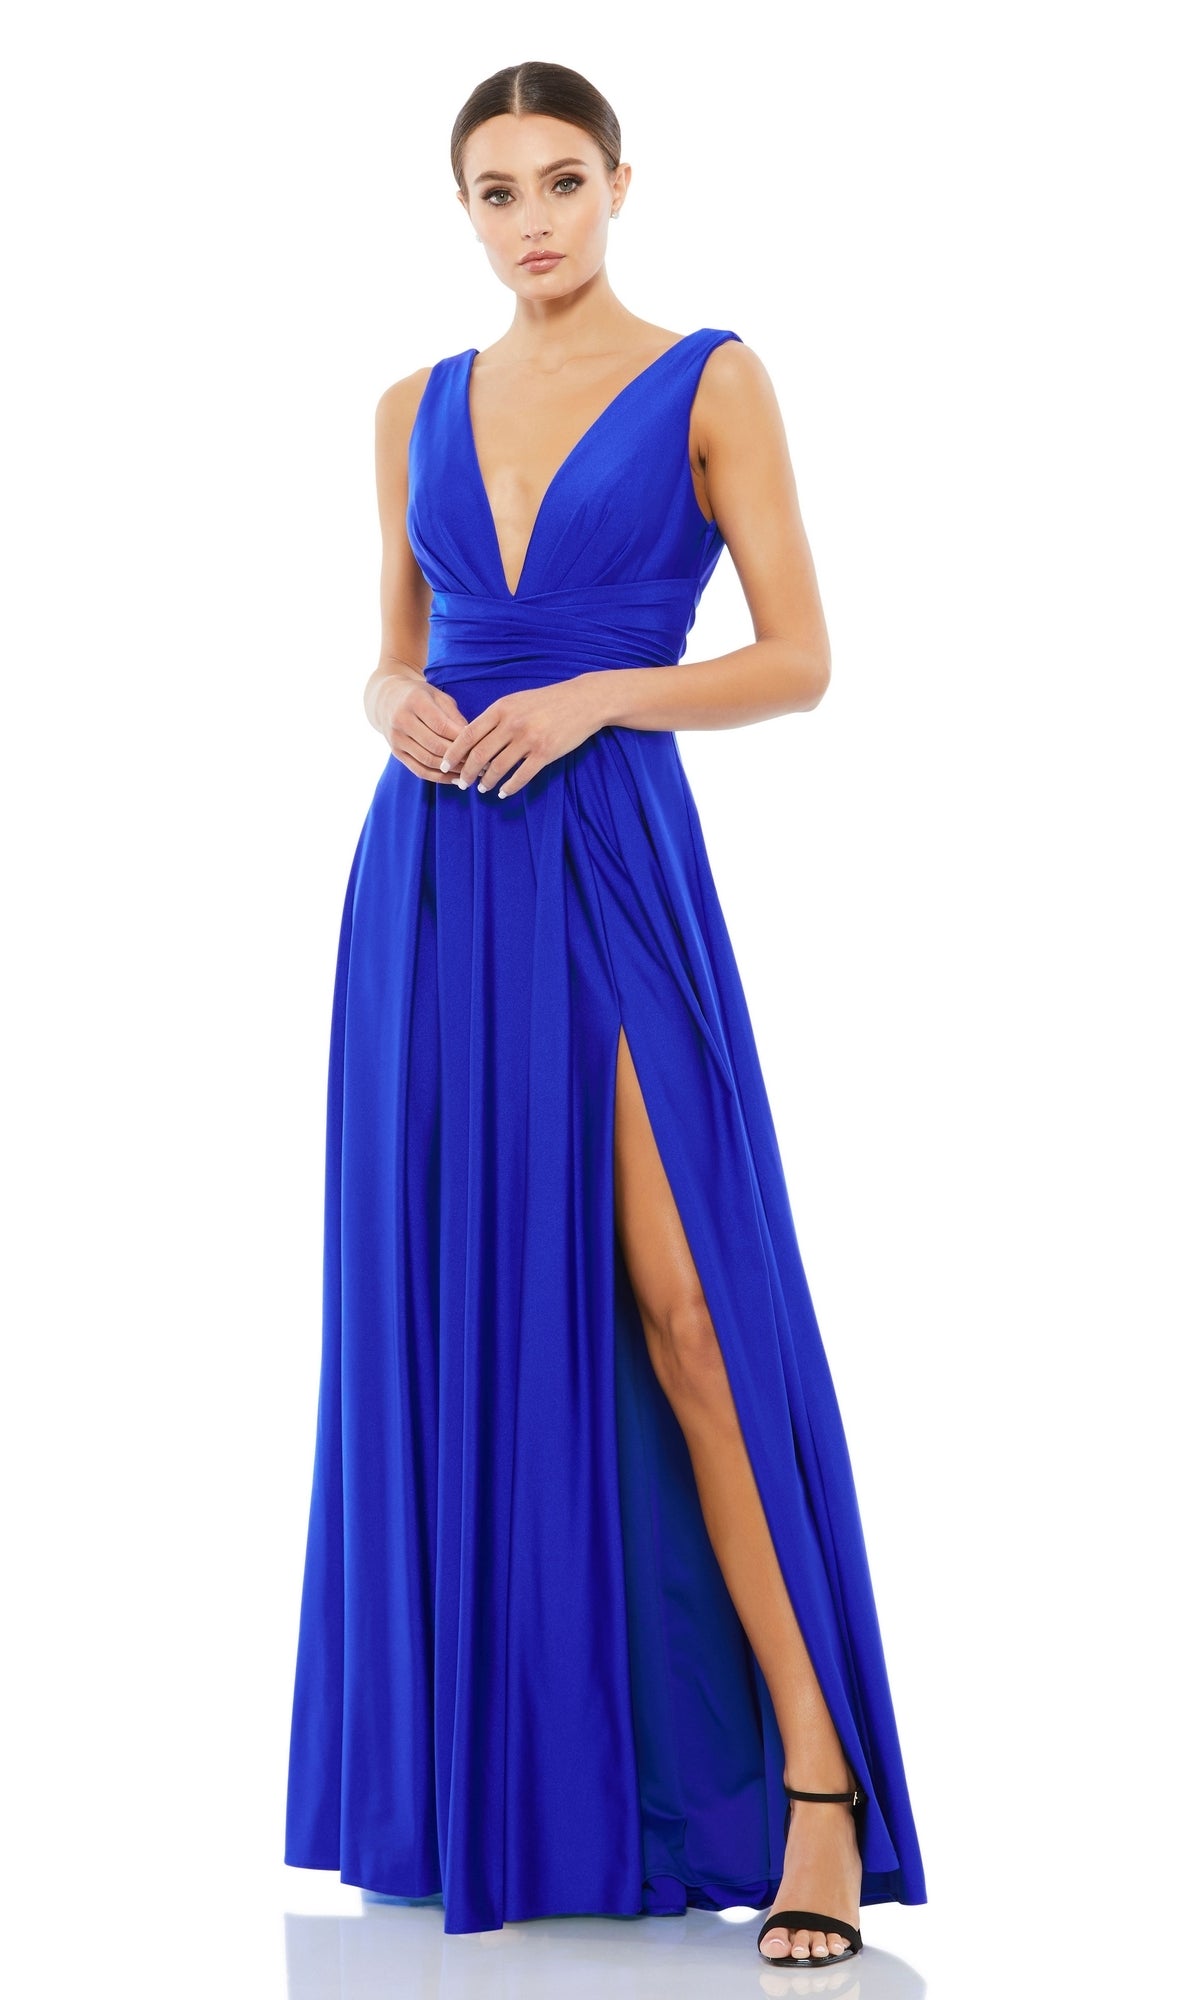 Long Formal Dress 26578 by Mac Duggal